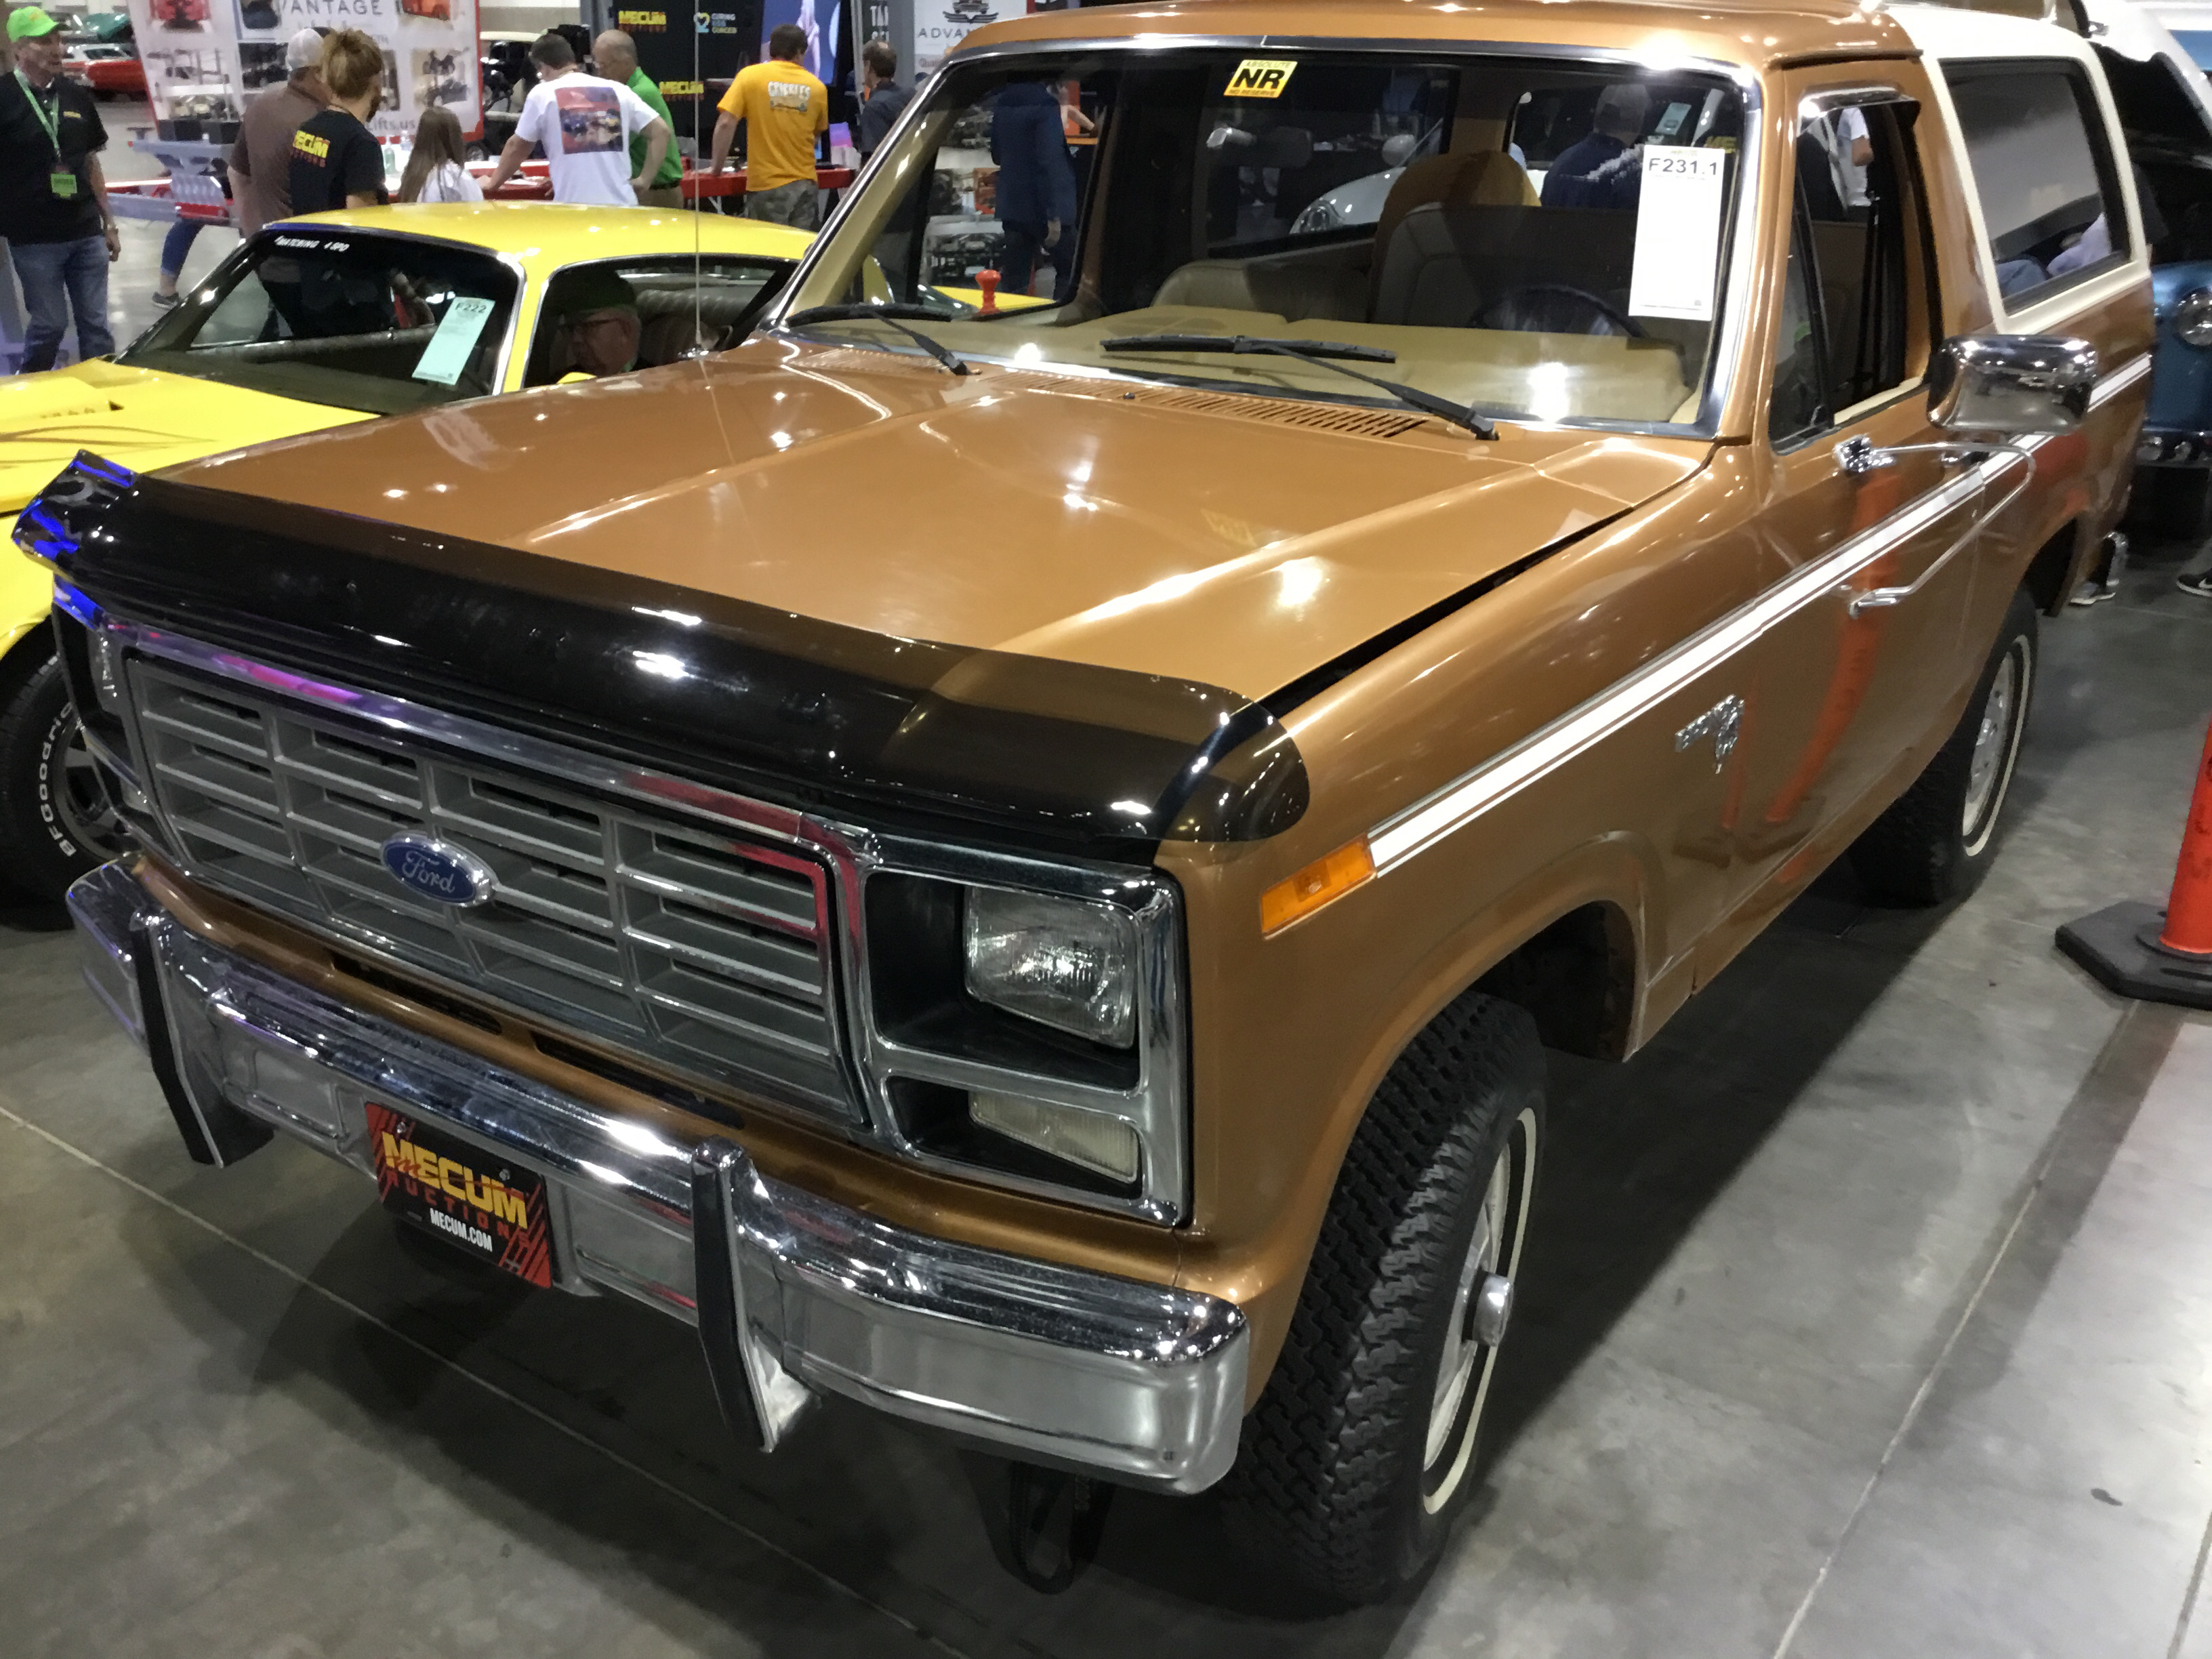 1985 Ford Bronco XLT